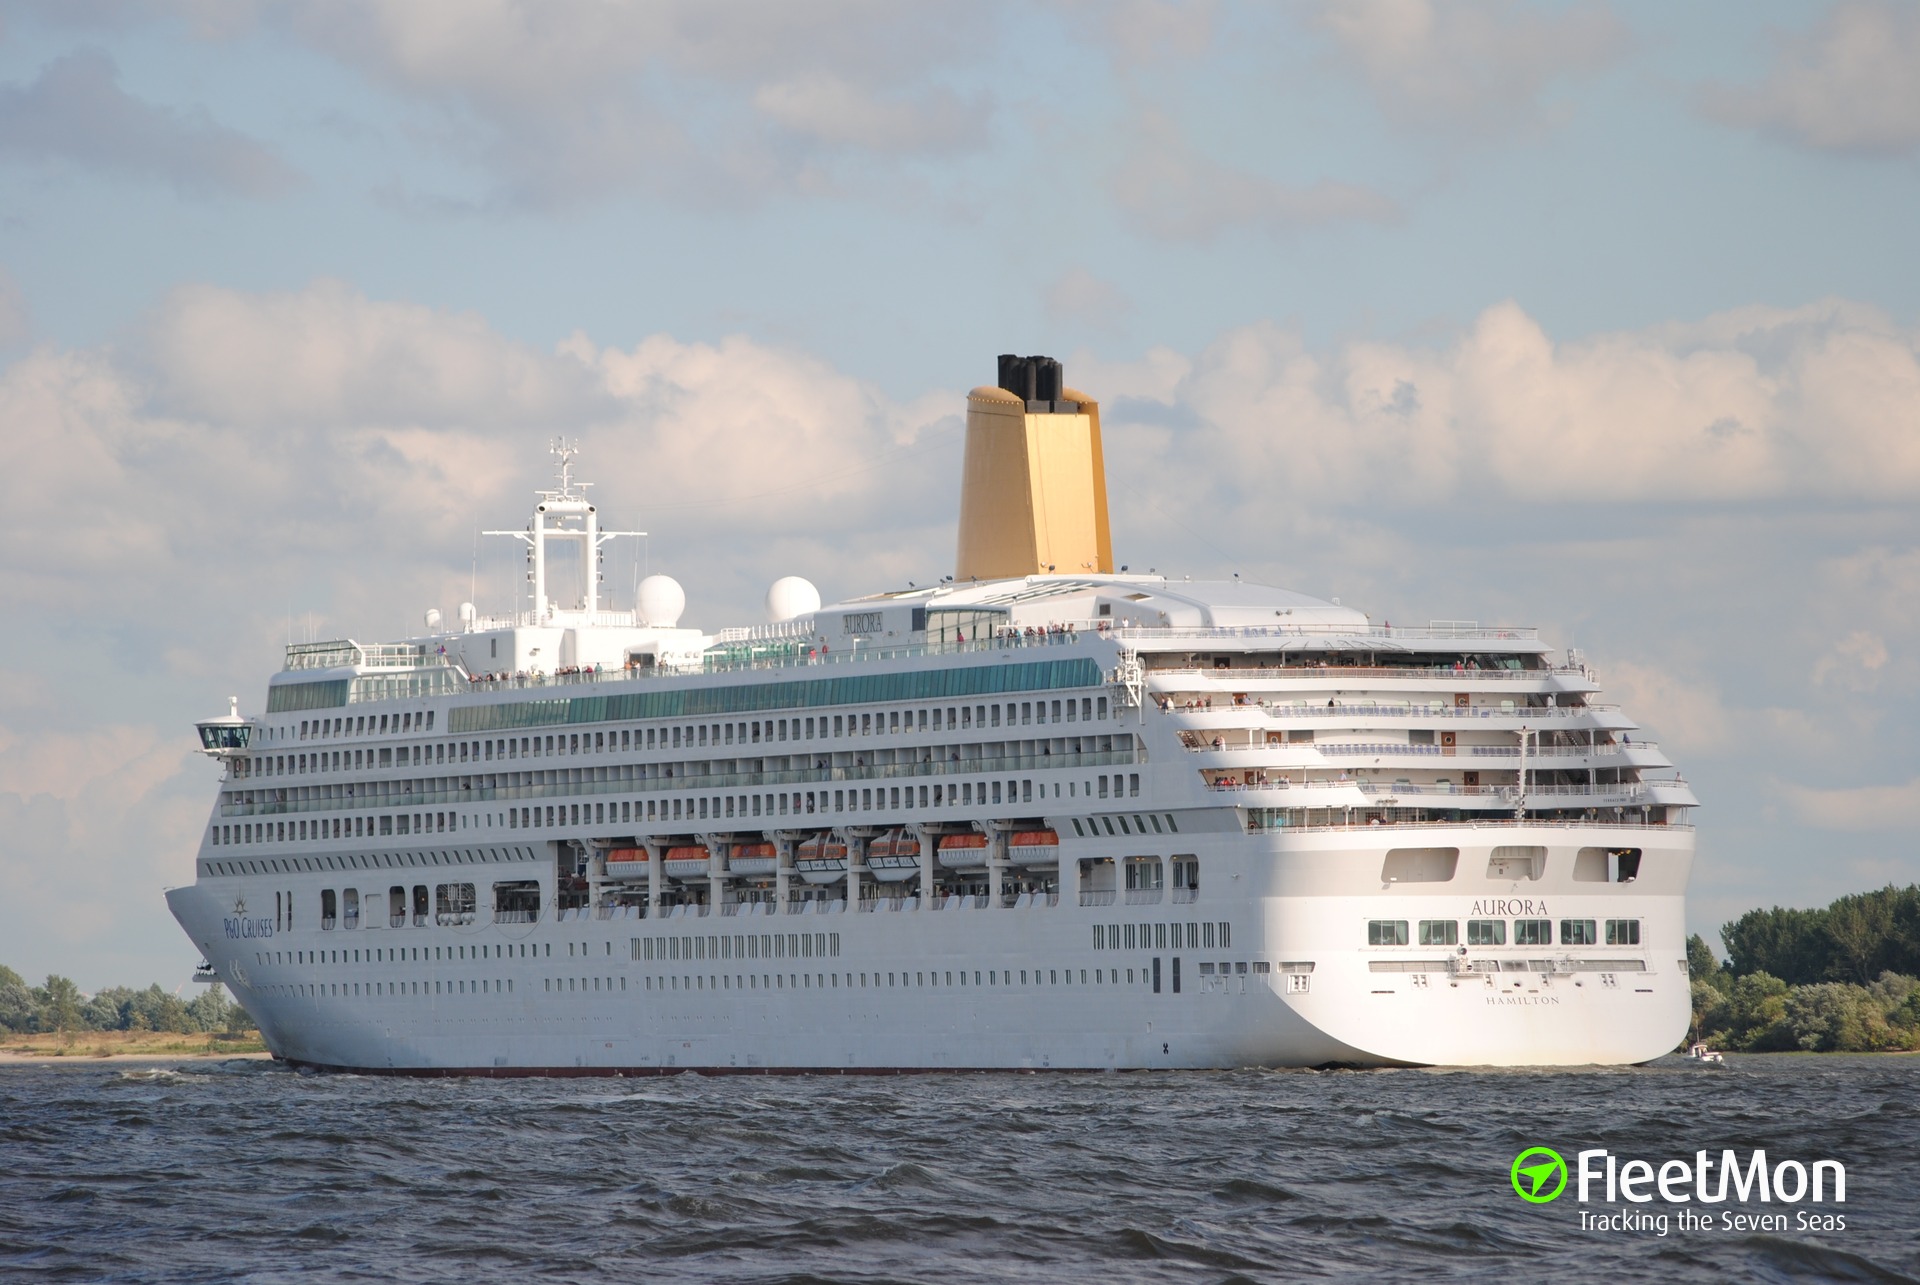 43++ Aurora cruise ship capacity info